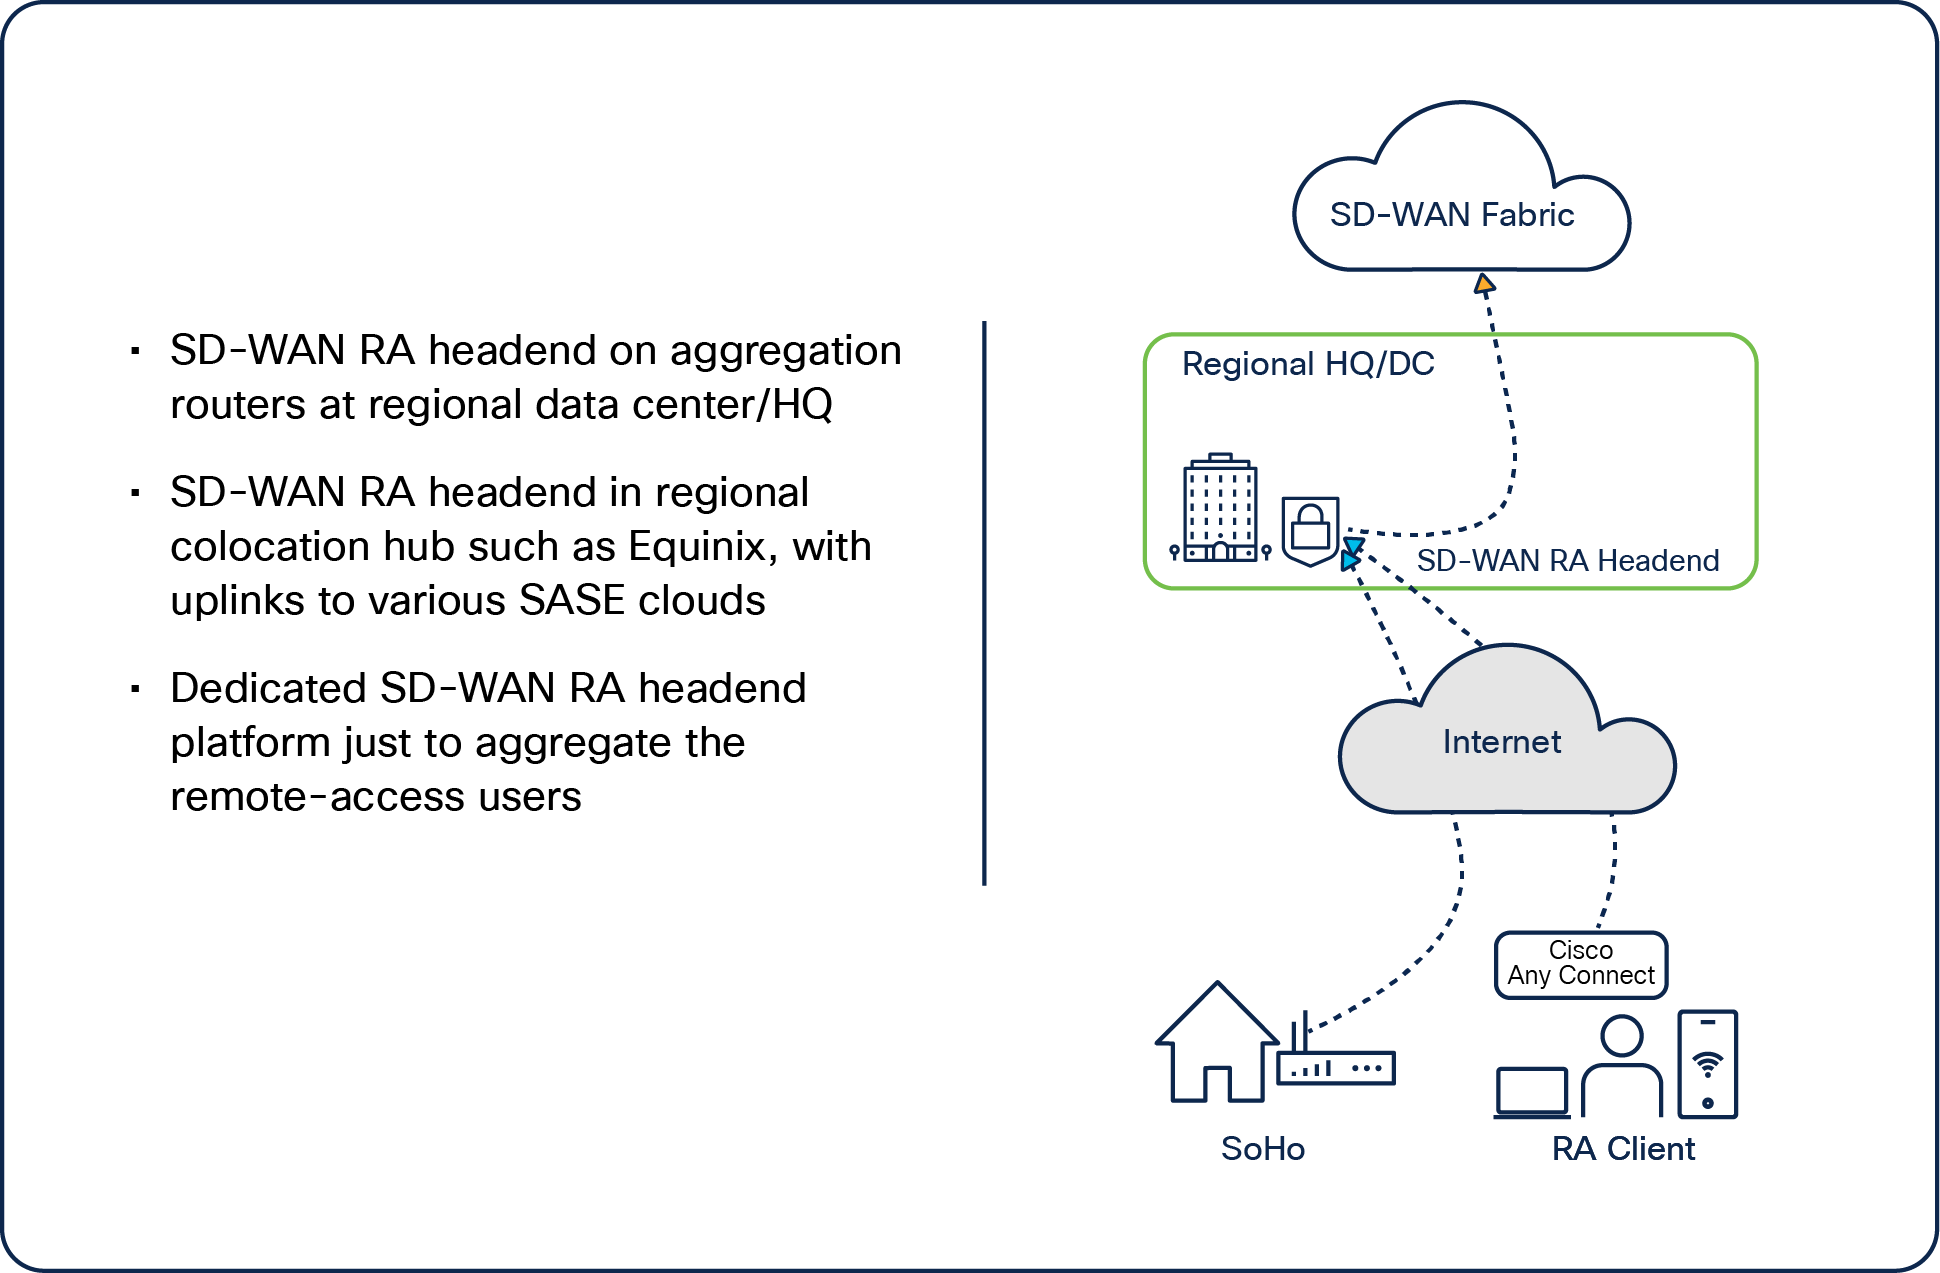 Data center/HQ as SD-WAN RA headend – dedicated platform for remote access